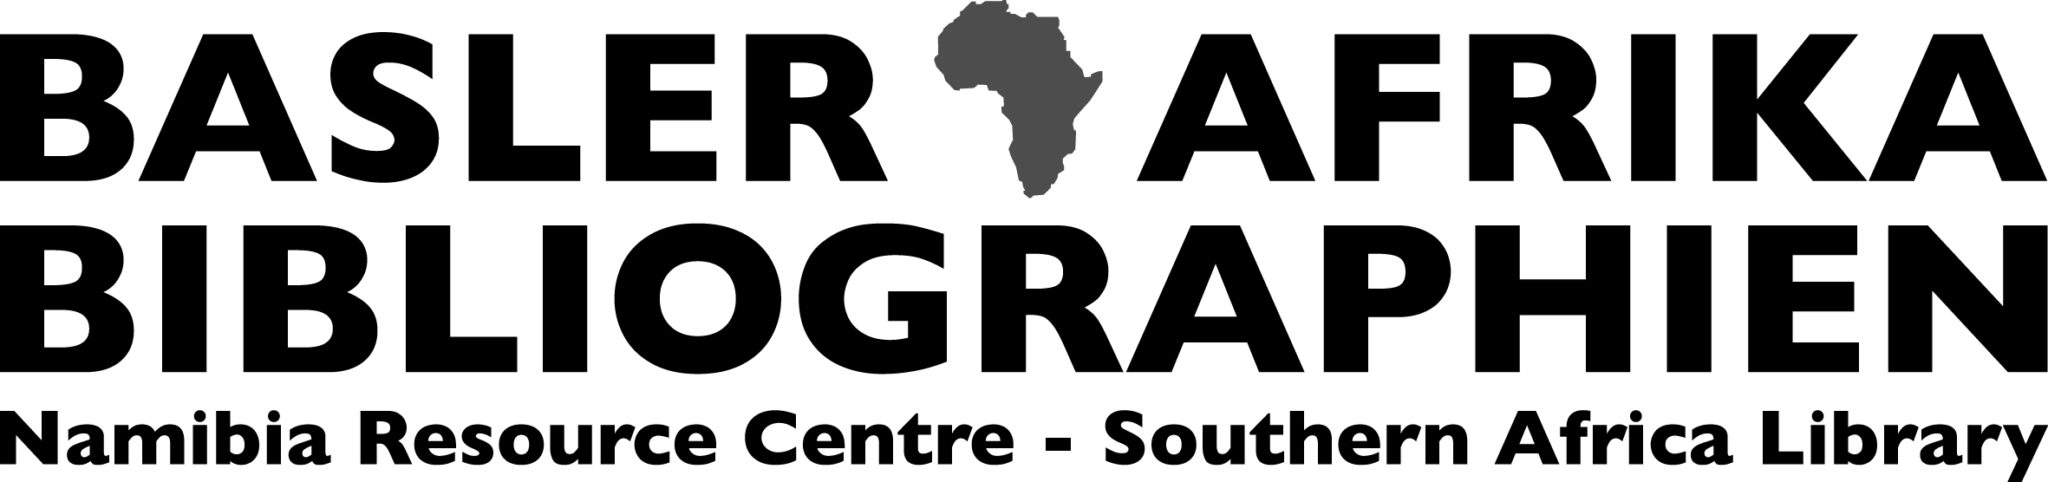 Basler Afrika Bibiliographien